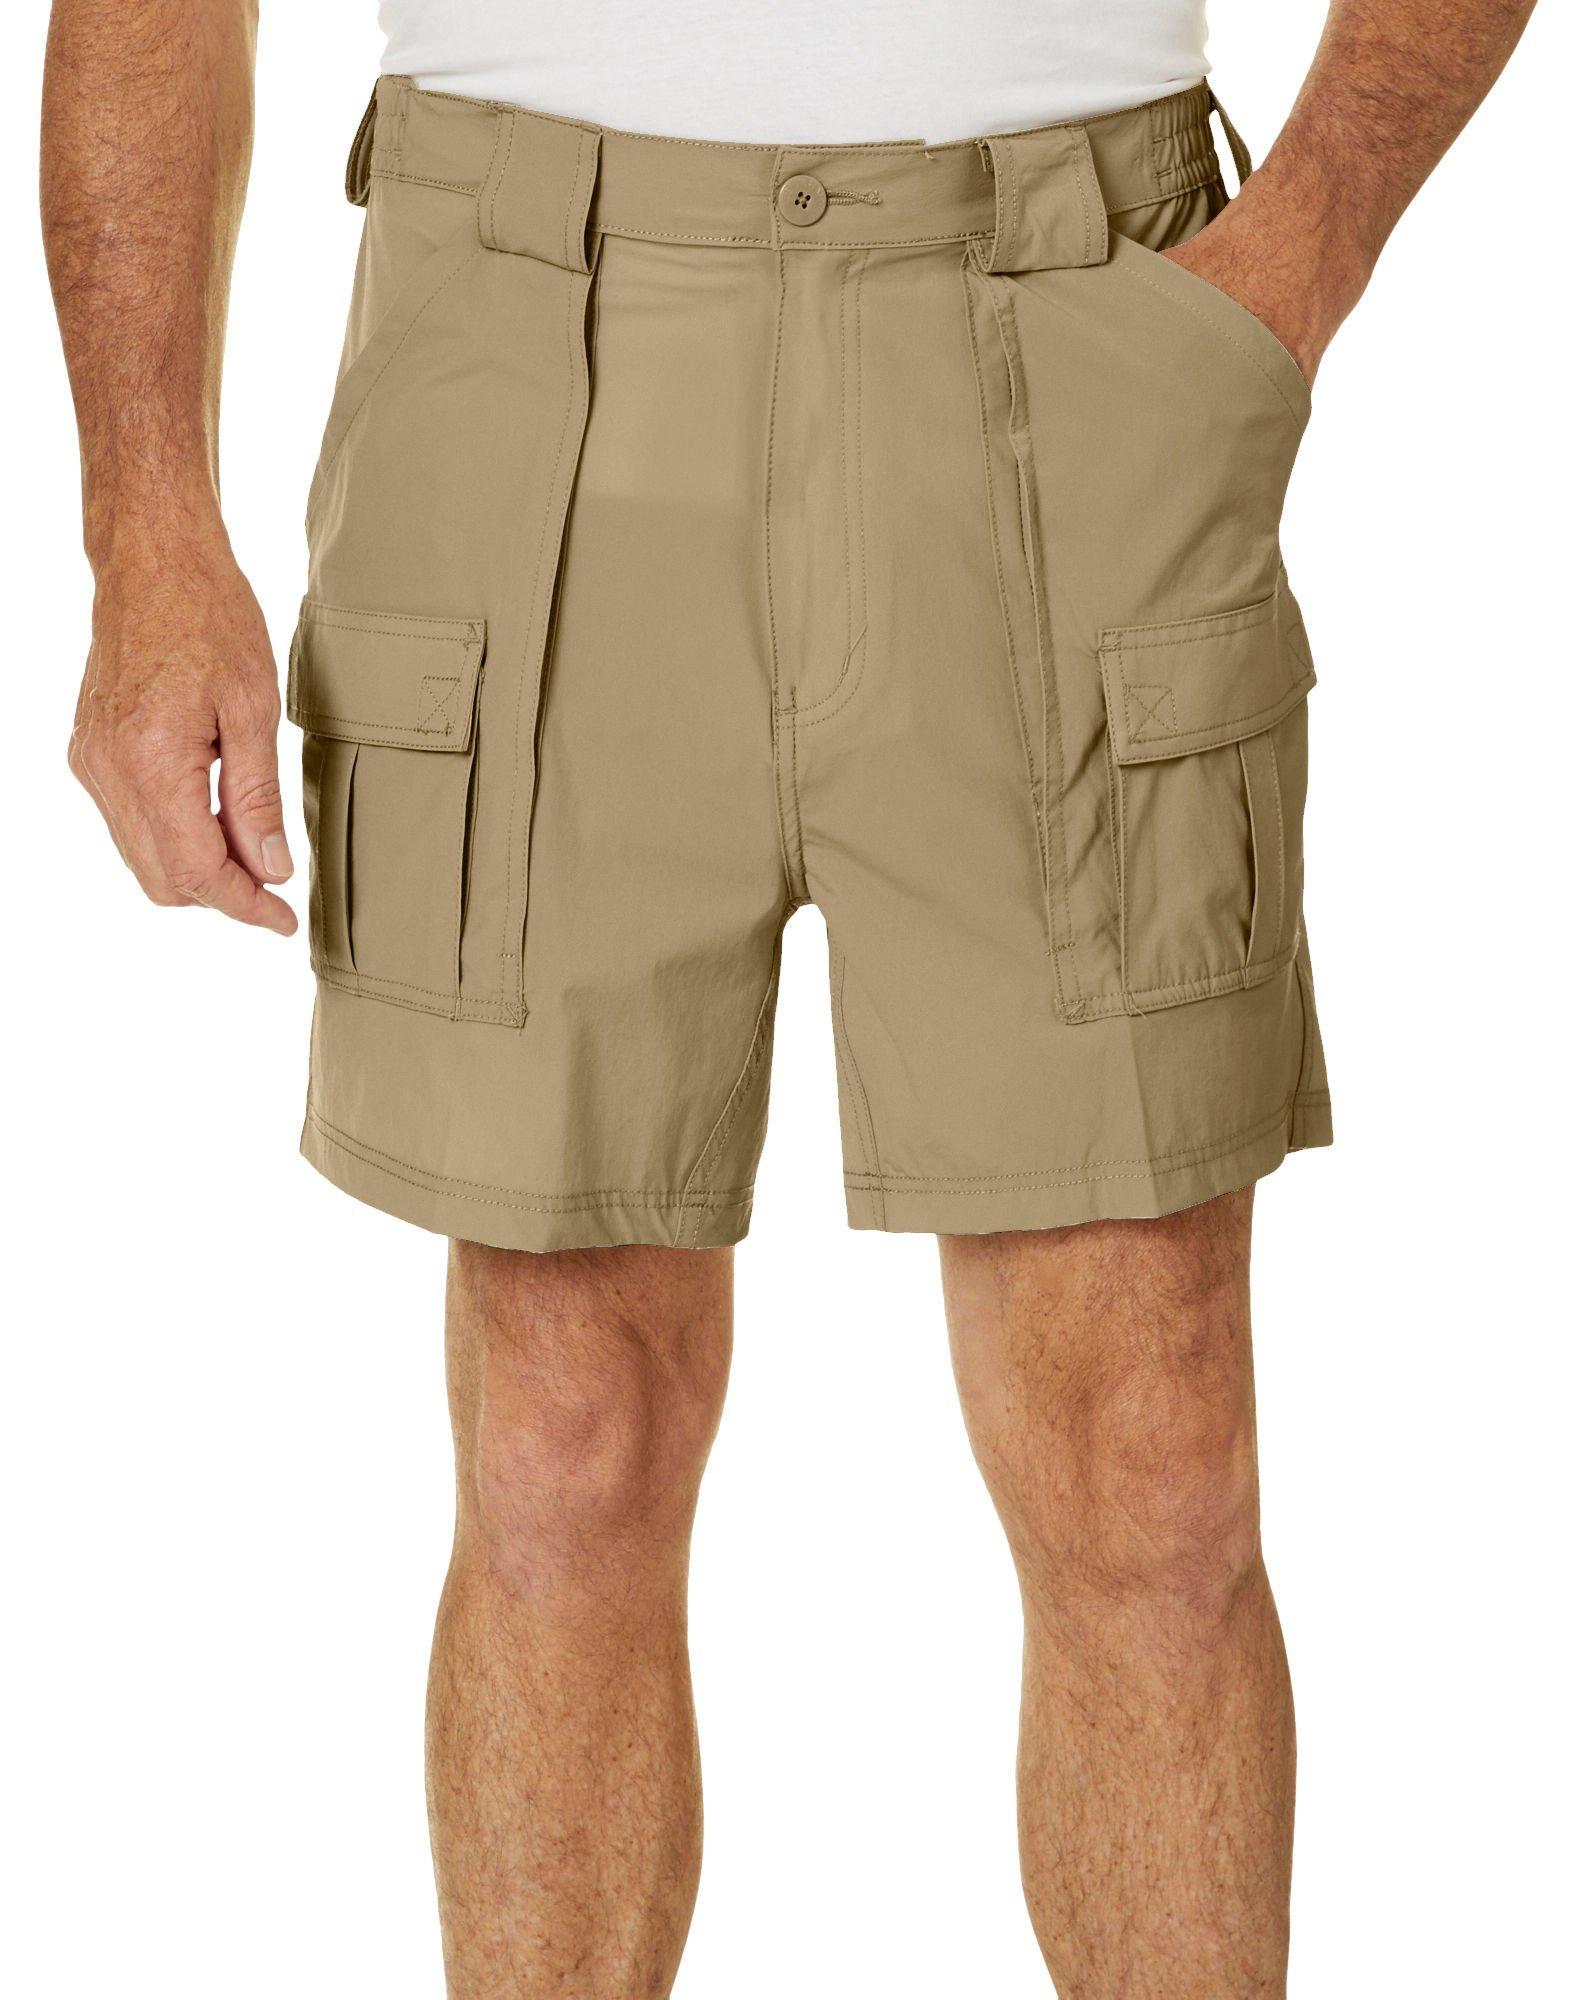 Mens Solid Trader Comfortex Cargo Shorts